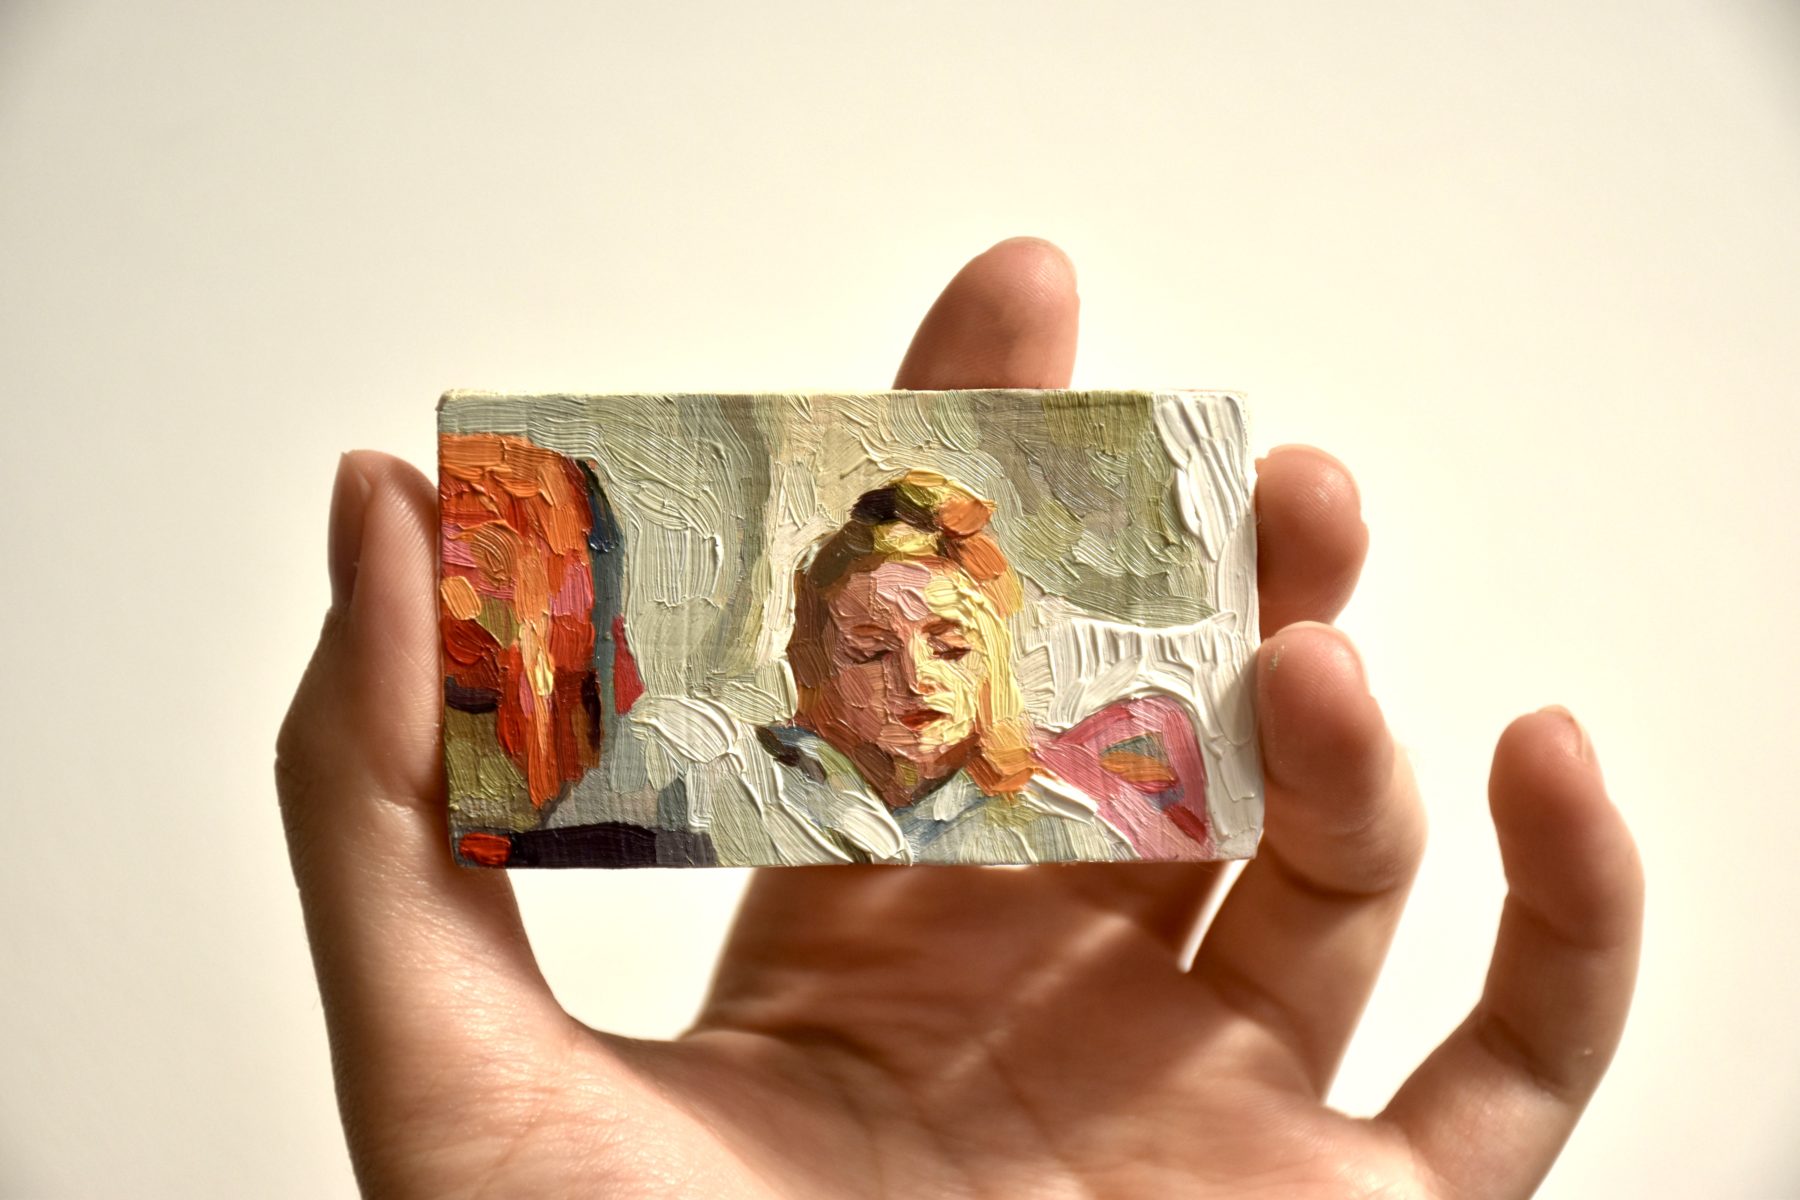 Marisa Stratton, 'Zoom Call', 2021, Oil on panel, 2.54cm x 5.08cm, ©Marisa Stratton